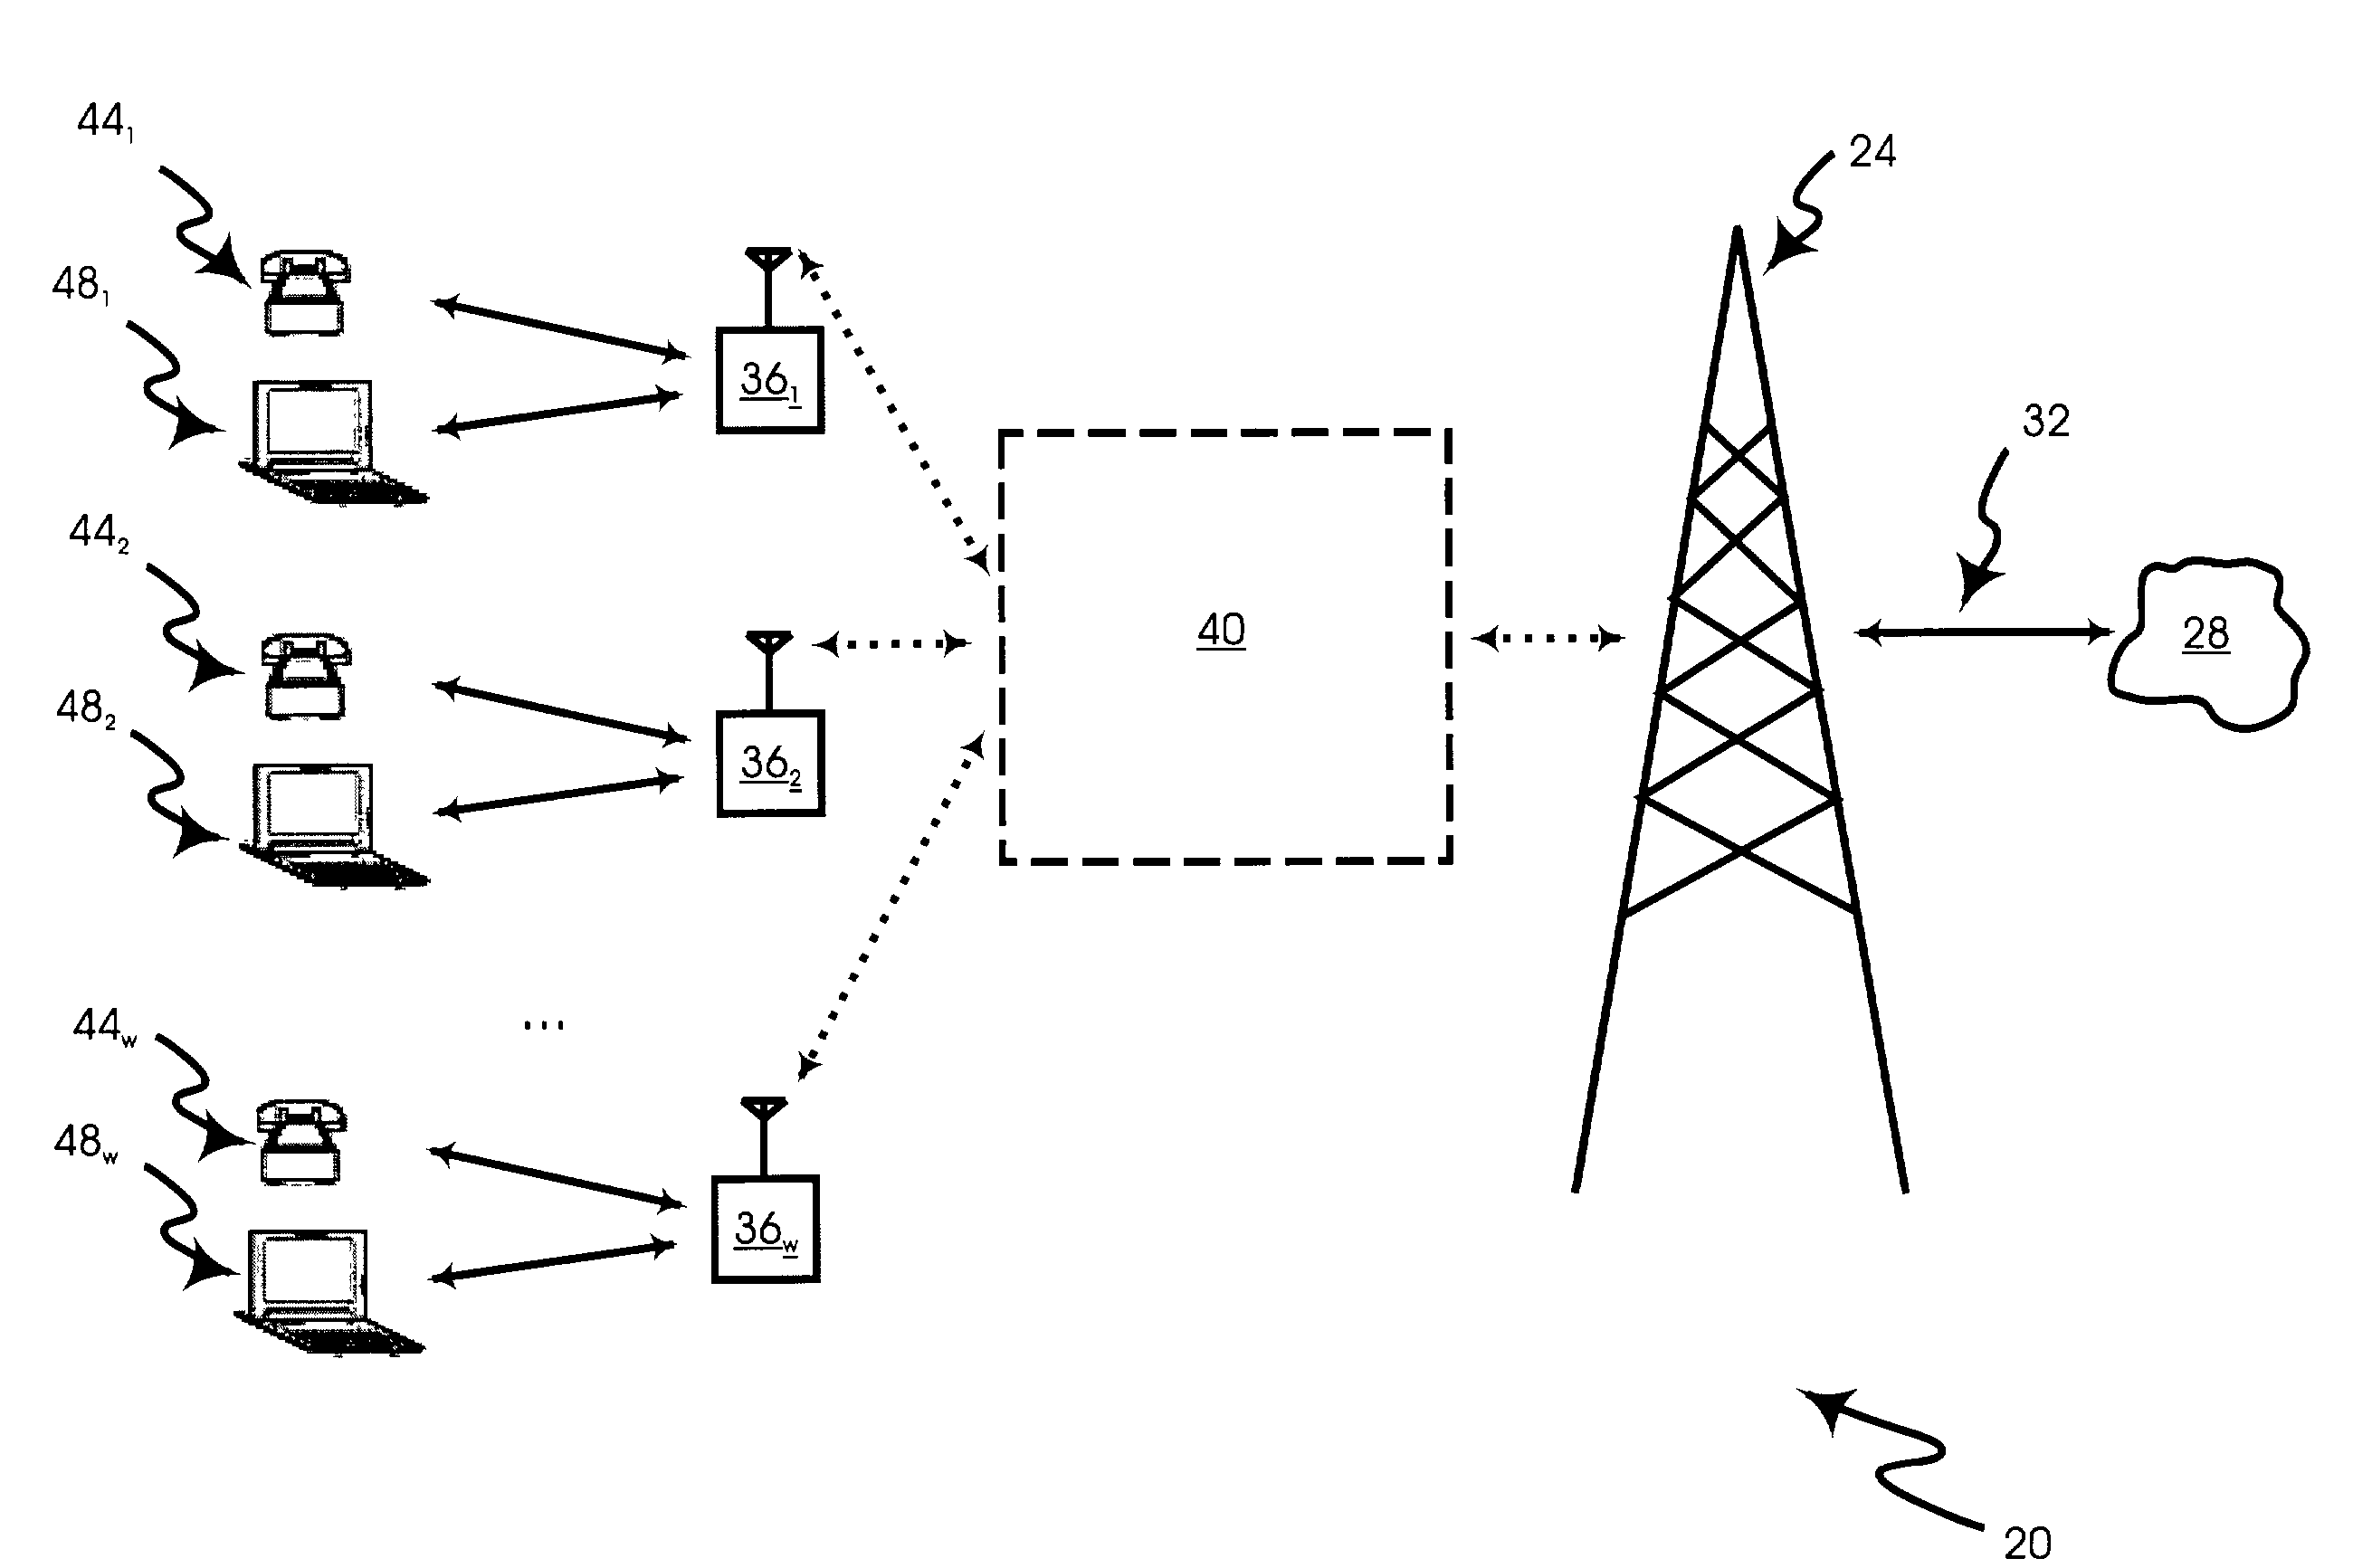 Wireless local loop antenna